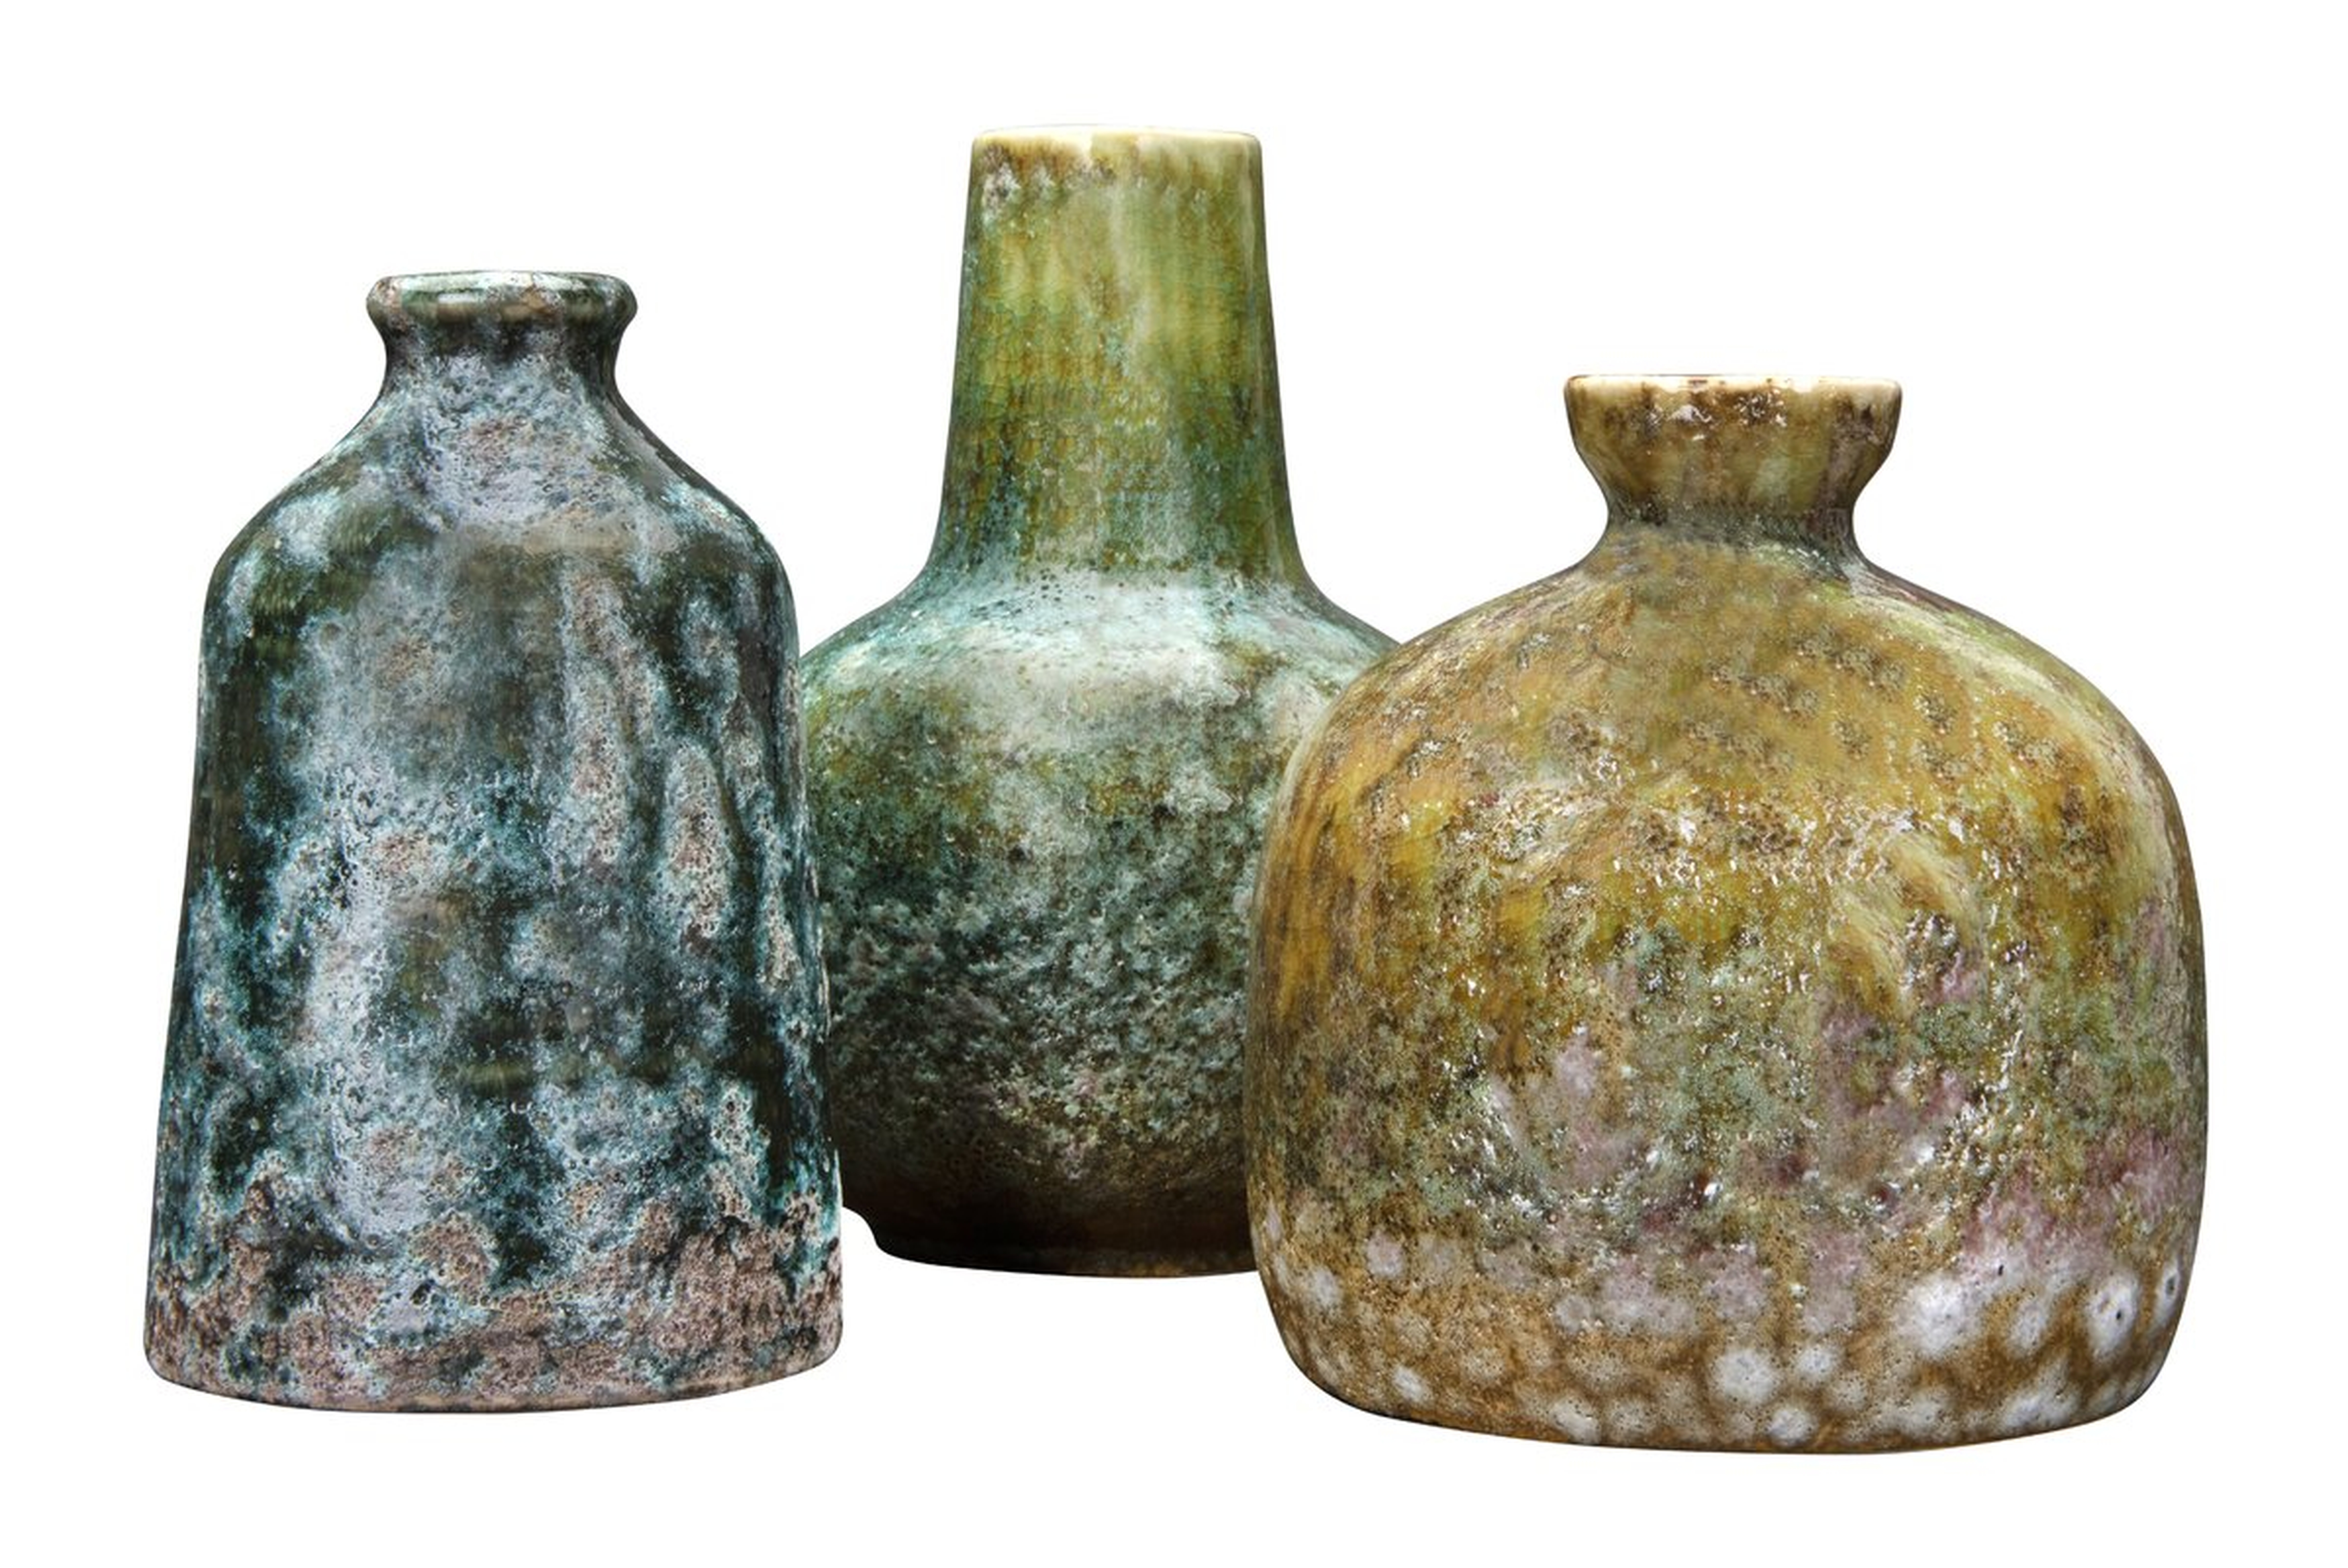 Kelch Textured Stoneware 3 Piece Table Vase Set - Wayfair